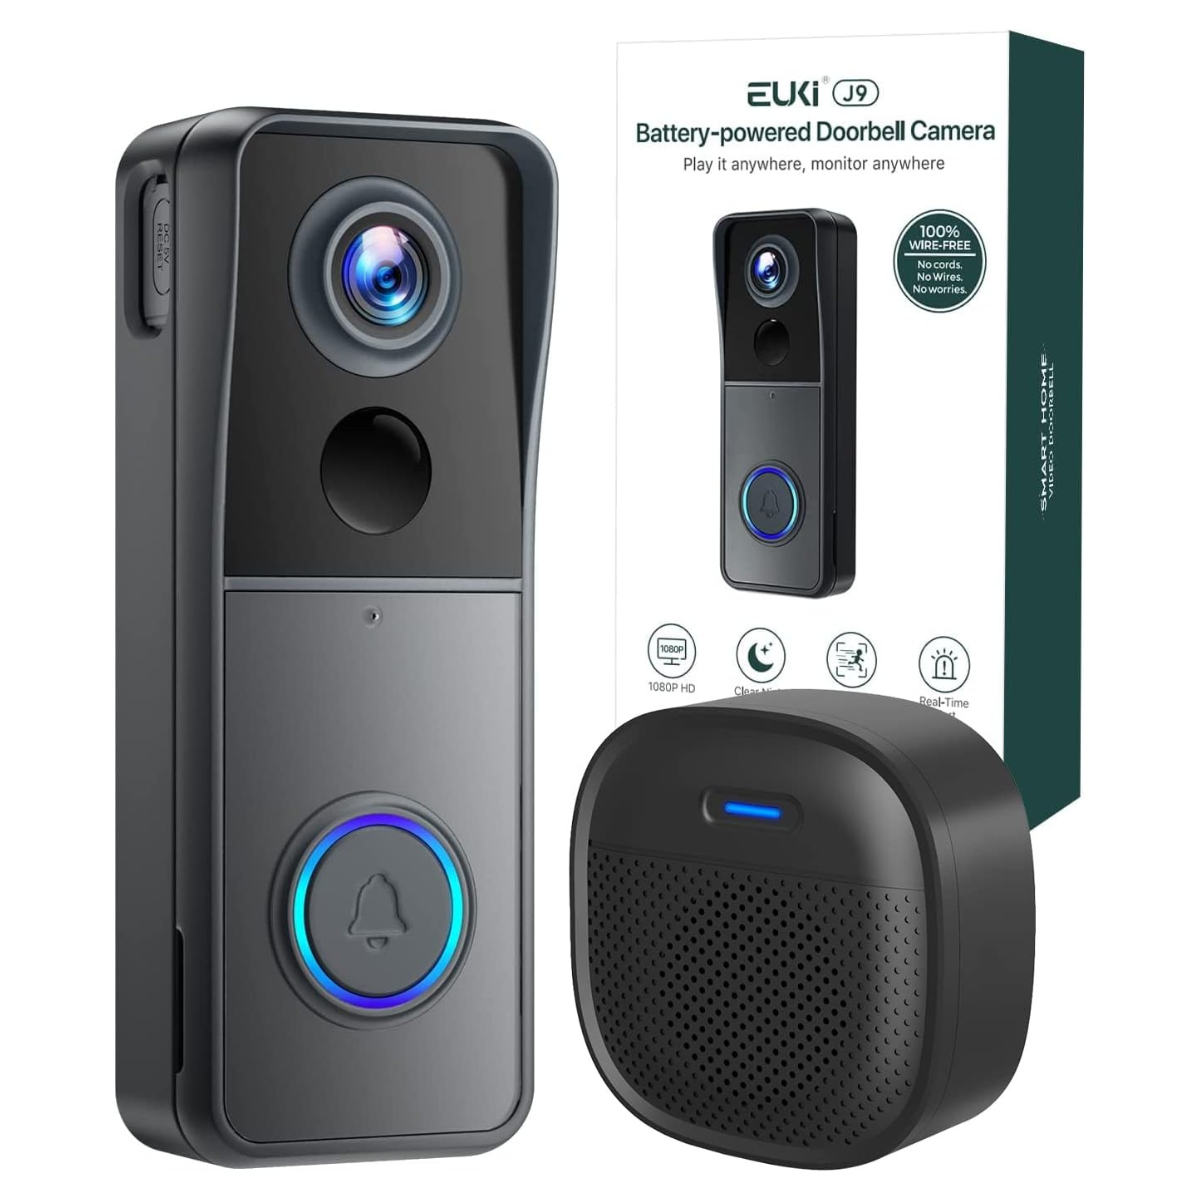 The Euki Wireless Video Doorbell